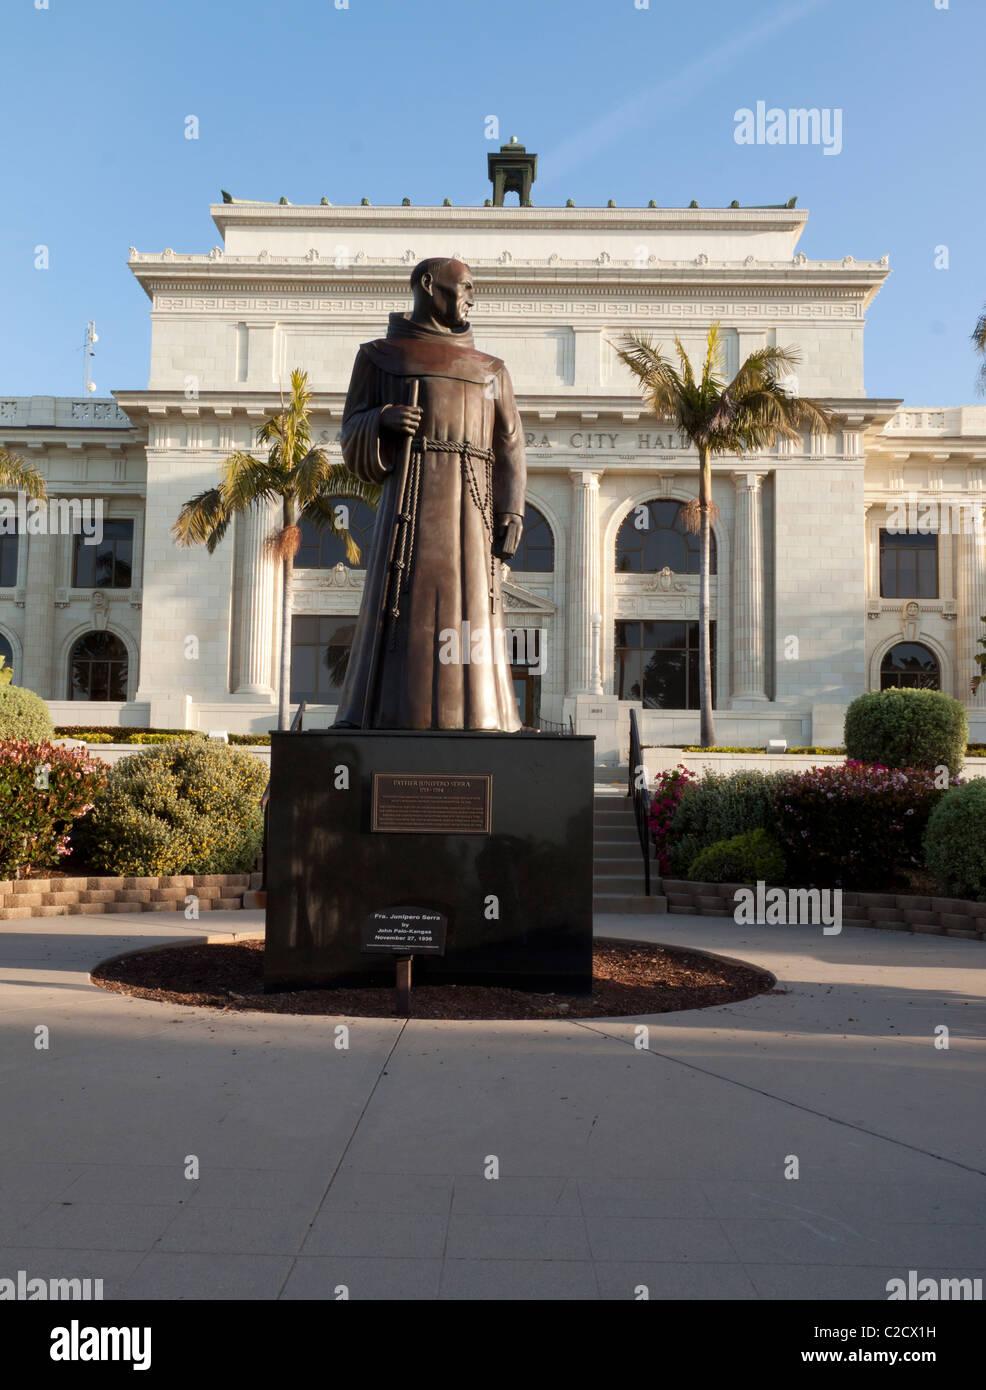 statue of Father Junipero Serra in front of the San Buenaventura City Hall in Ventura California, USA Stock Photo